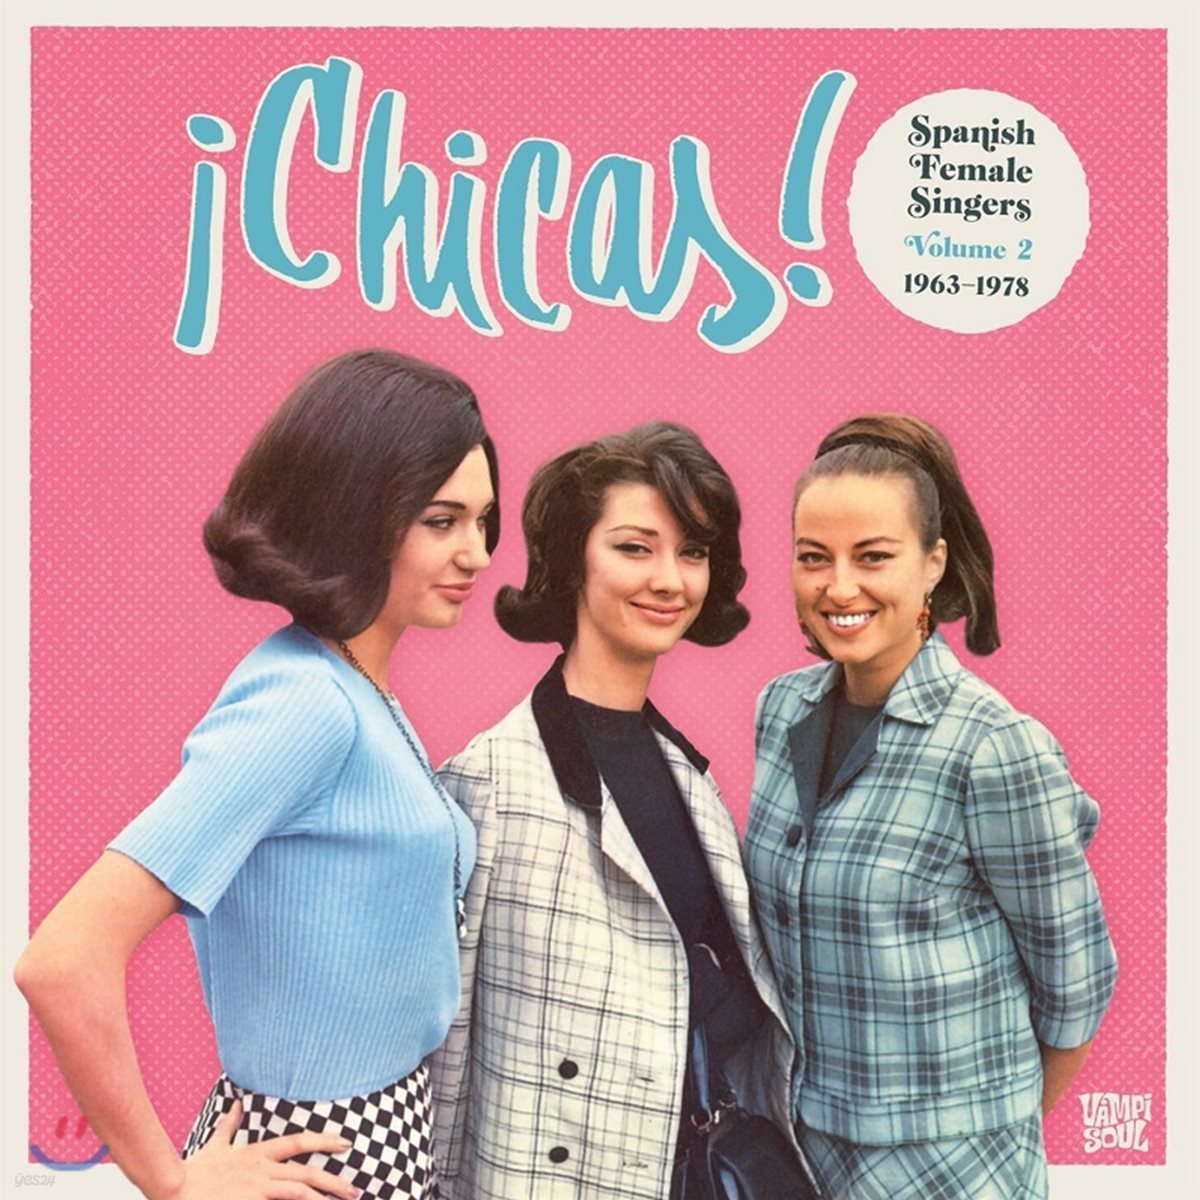 Chicas - Spanish Female Singers Volume 2: 1963-1978